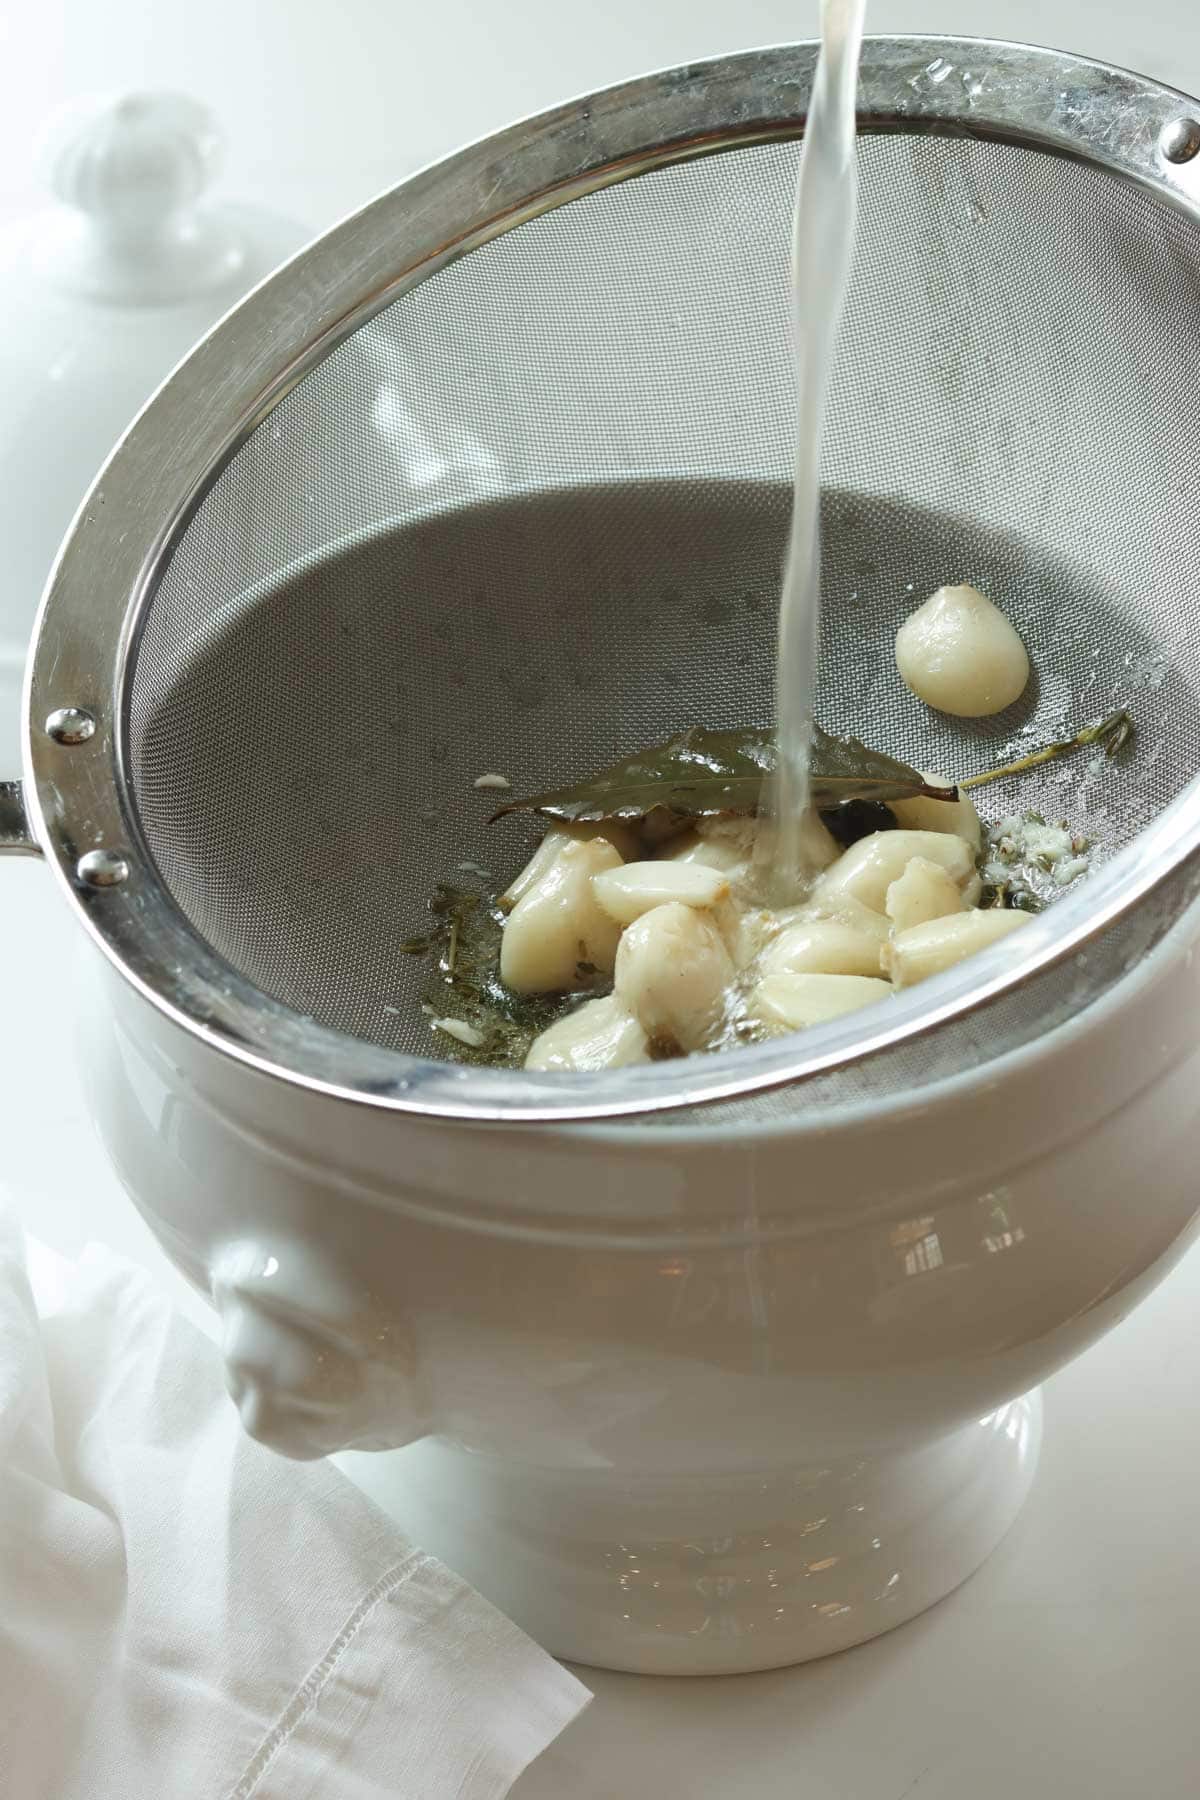 straining the garlic soup into a white soup tureen through a mesh sieve